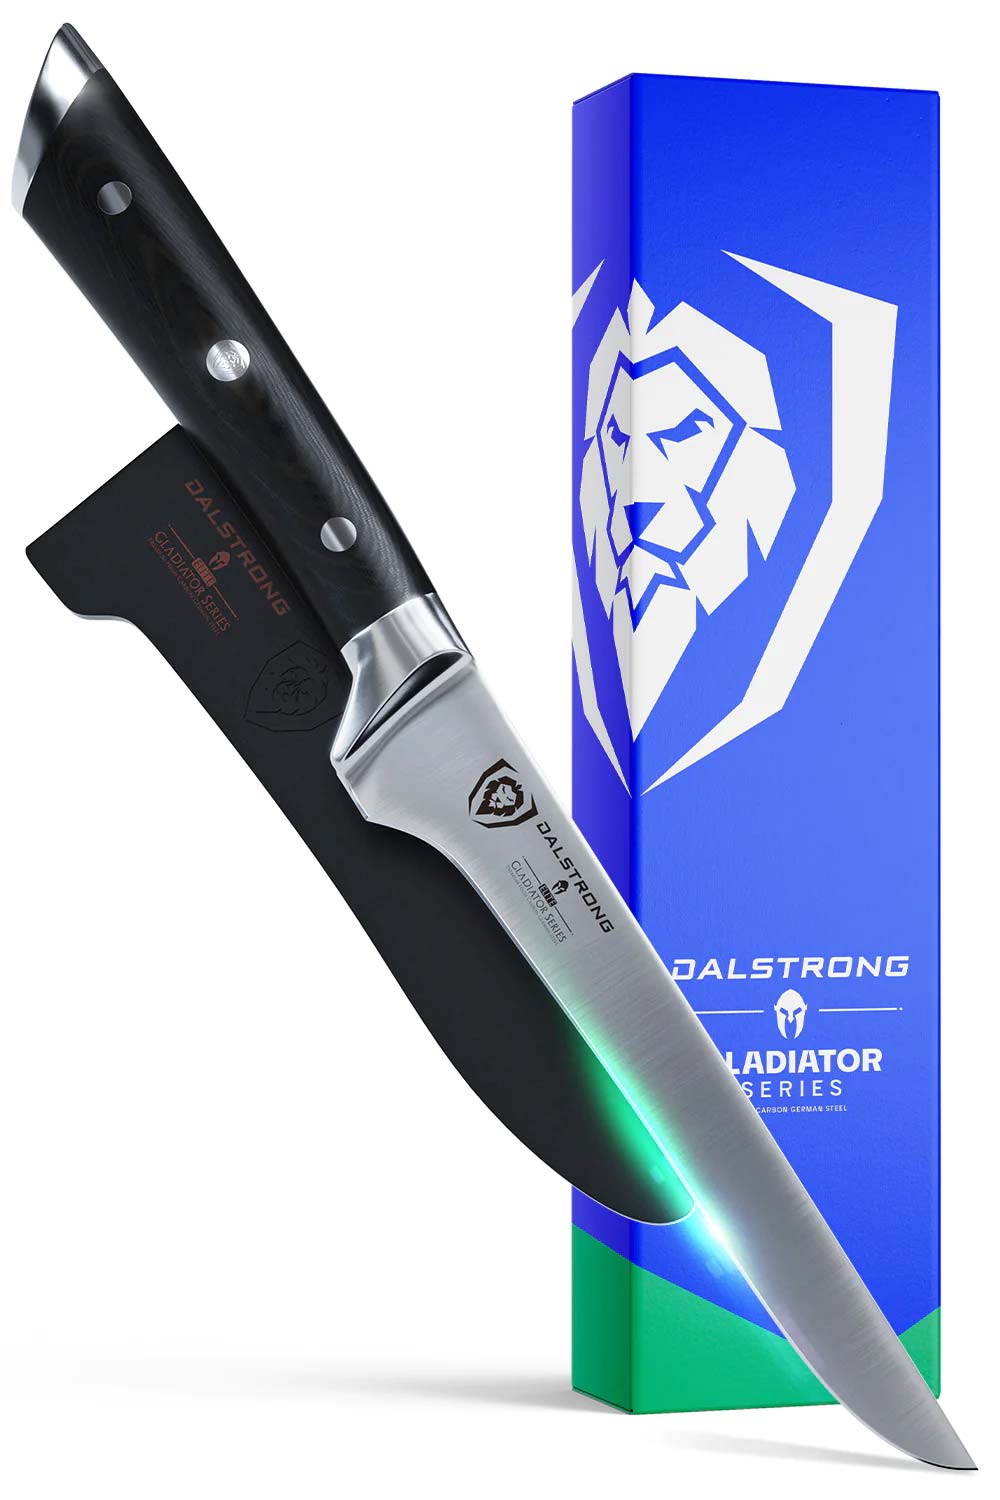 Boning Knife 6" | Gladiator Series | NSF Certified | Dalstrong ©